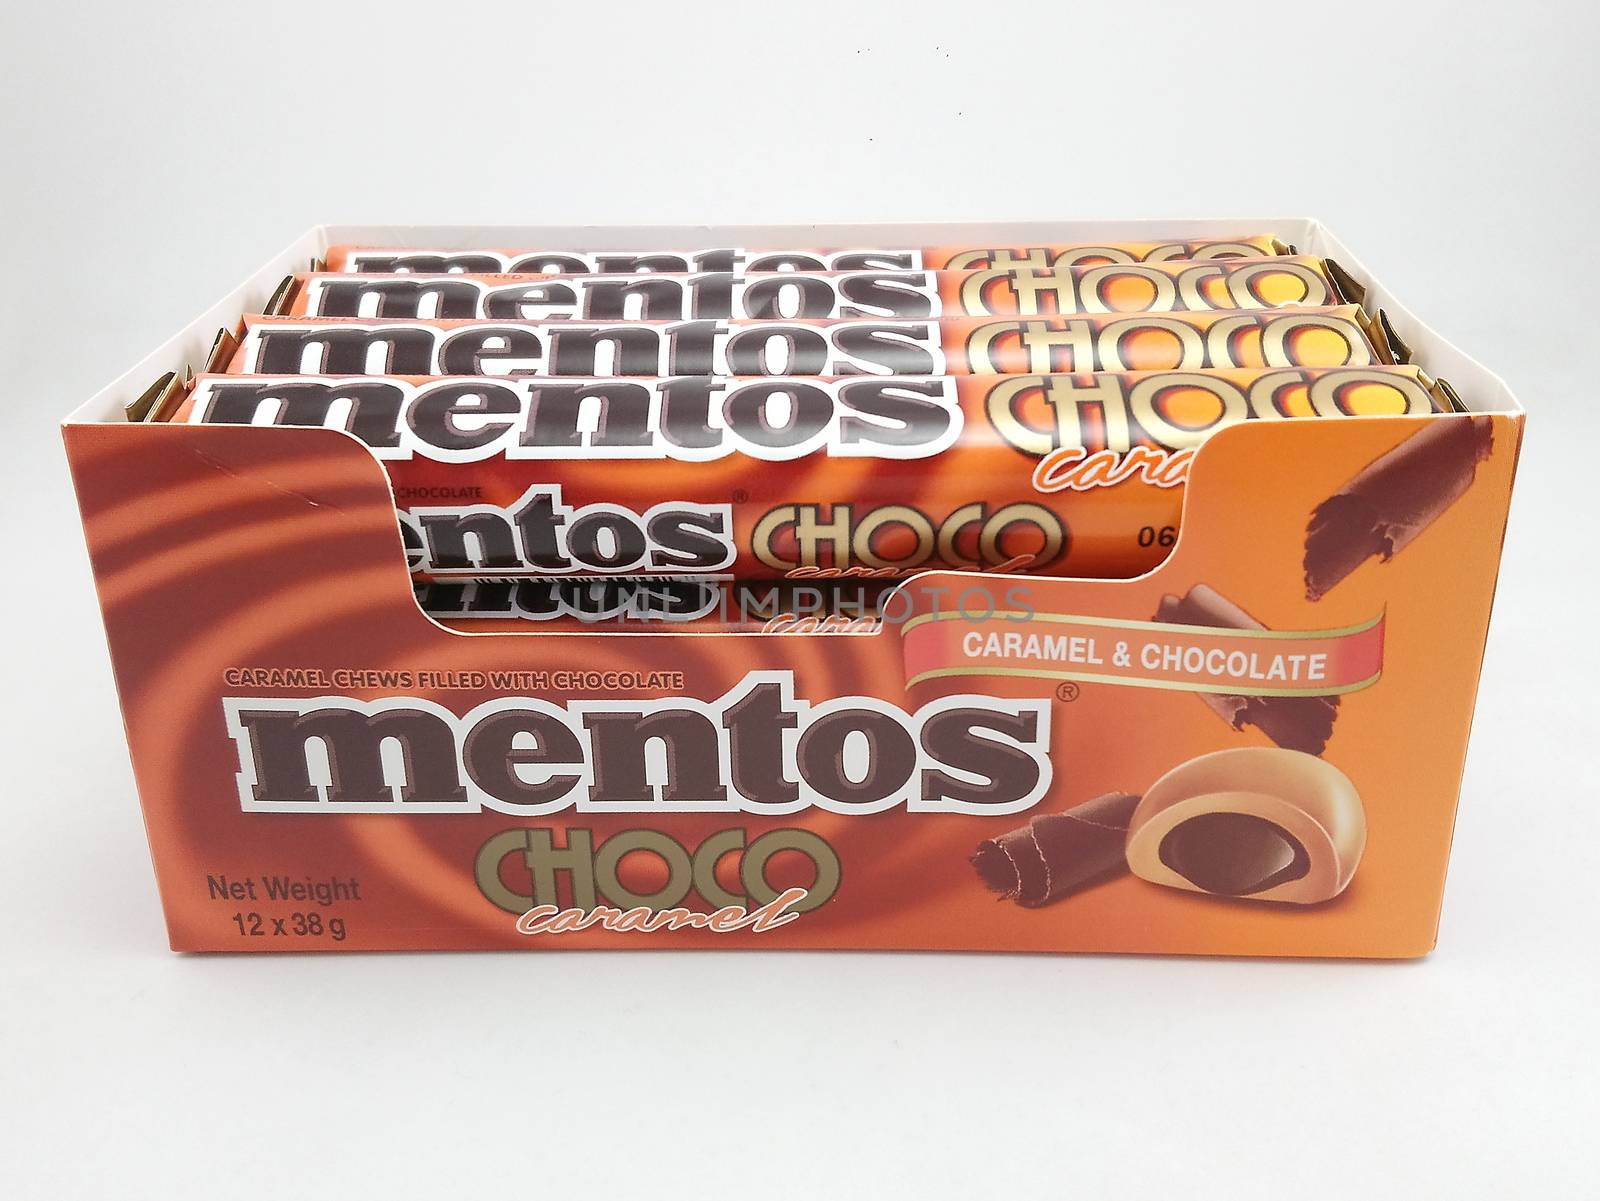 MANILA, PH - SEPT 22 - Mentos choco caramel on September 22, 2020 in Manila, Philippines.